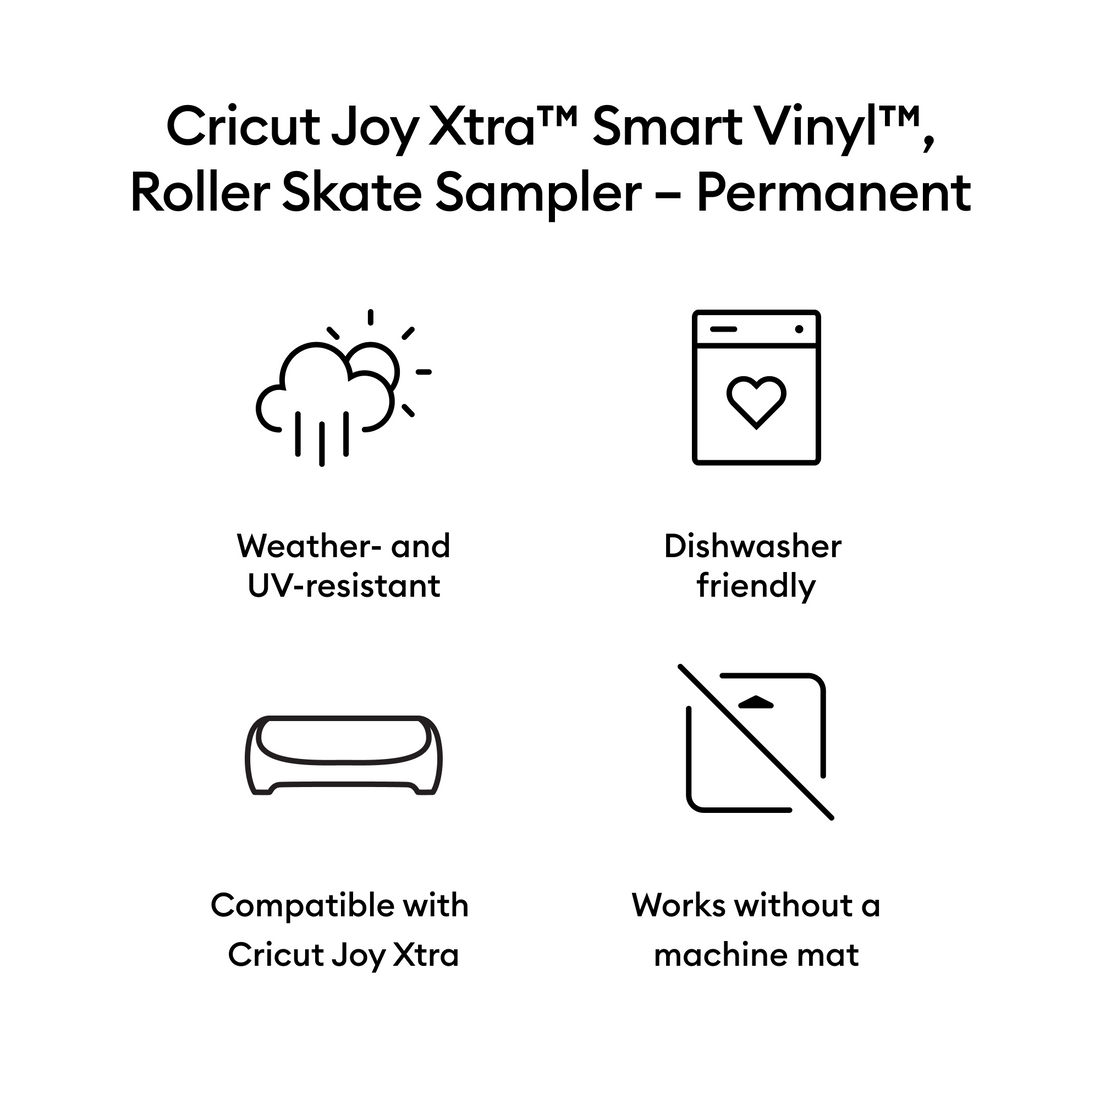 Cricut Joy Xtra Smart Vinyl Permanent Sampler - Roller Skate (3 ct)